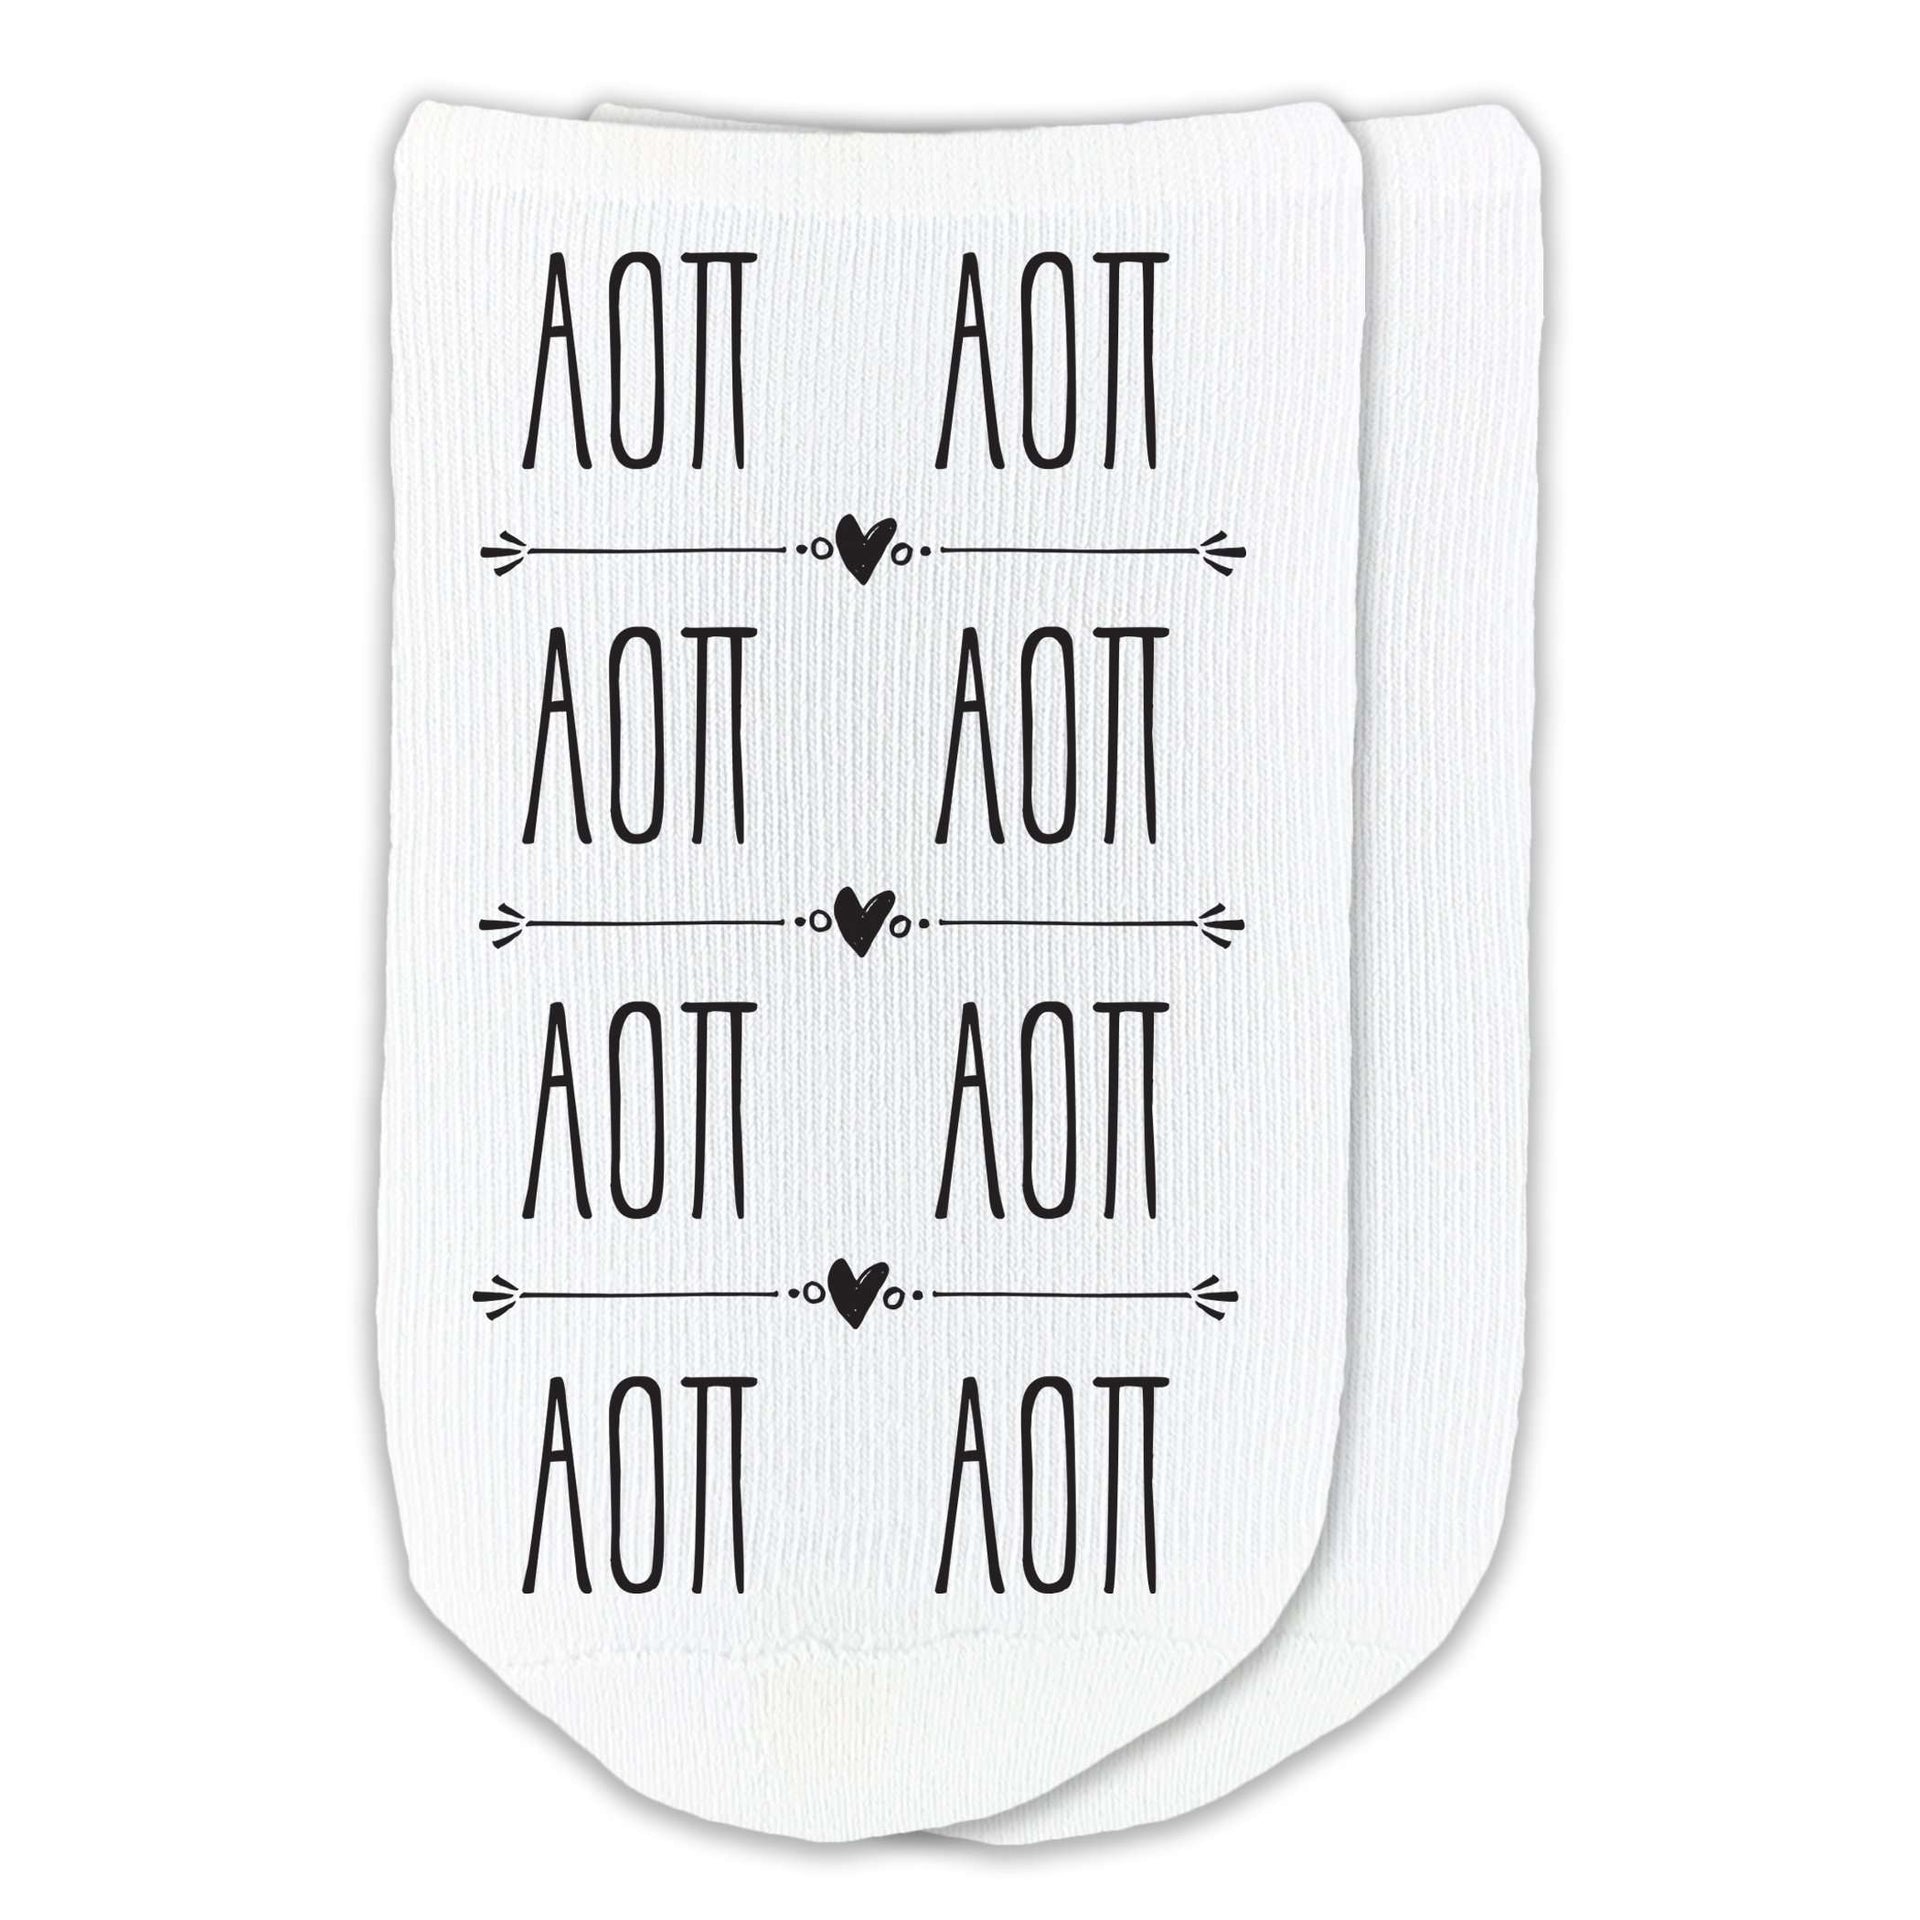 Alpha Omicron Pi sorority letters digitally printed in boho style on no show socks.